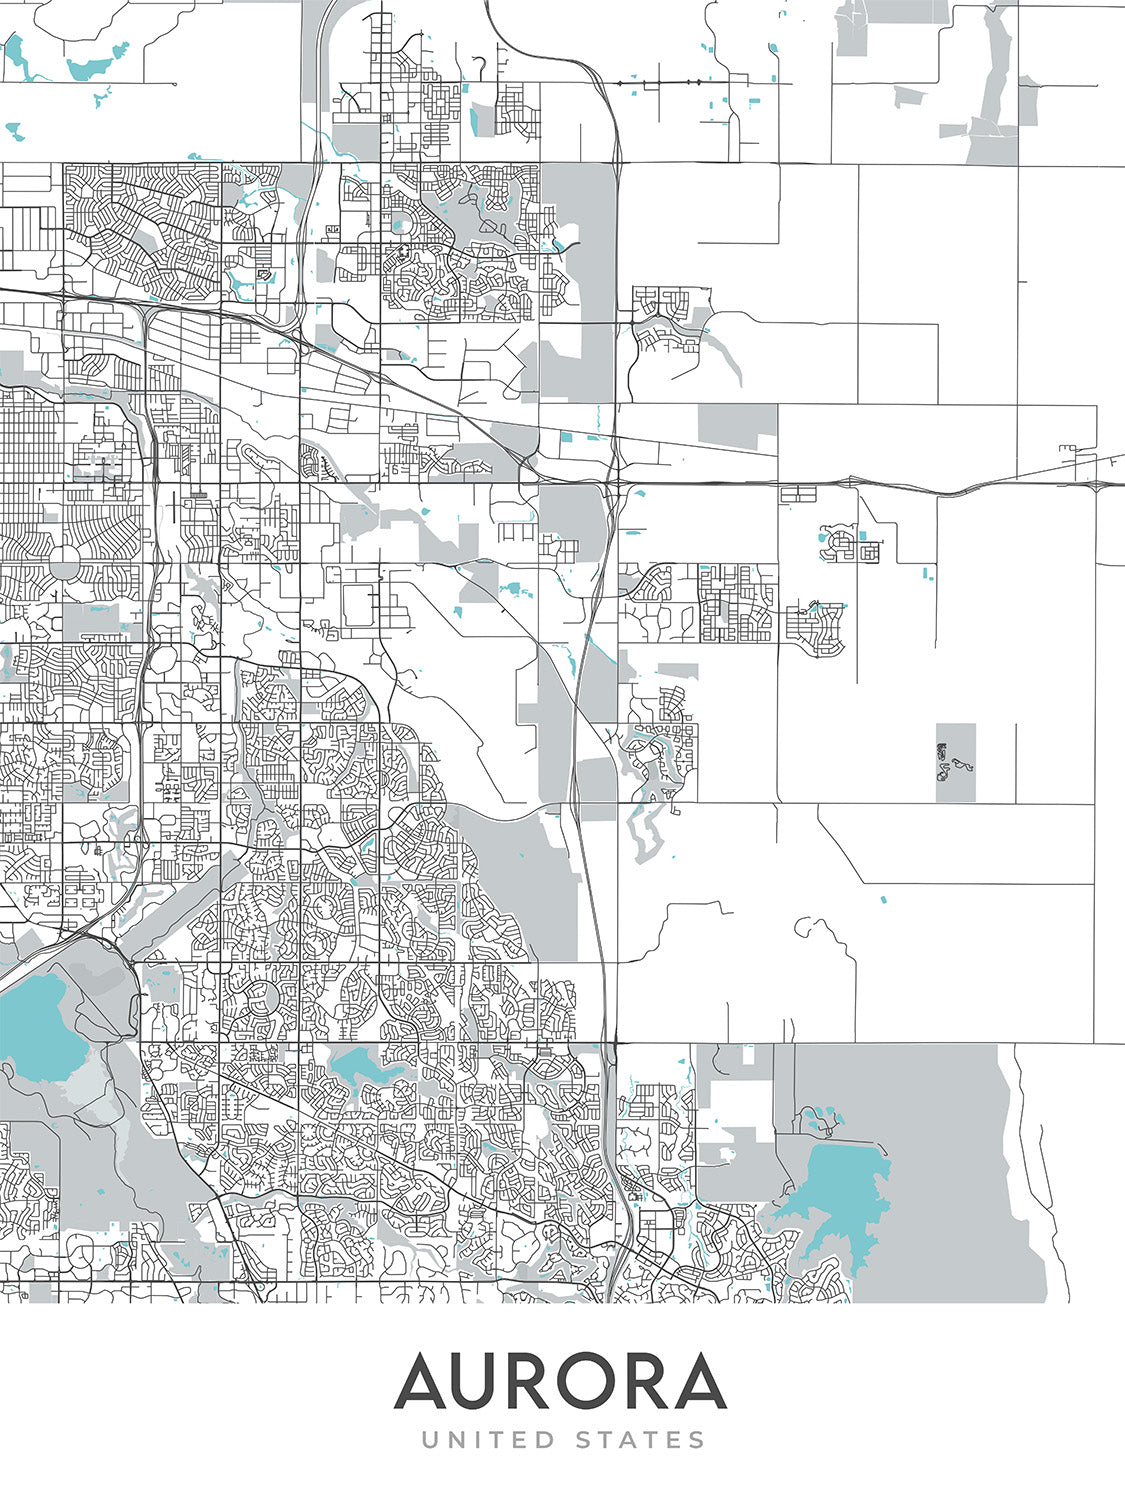 Mapa moderno de la ciudad de Aurora, CO: Aurora Hills, Cherry Creek, Fitzsimons, I-225, Buckley AFB